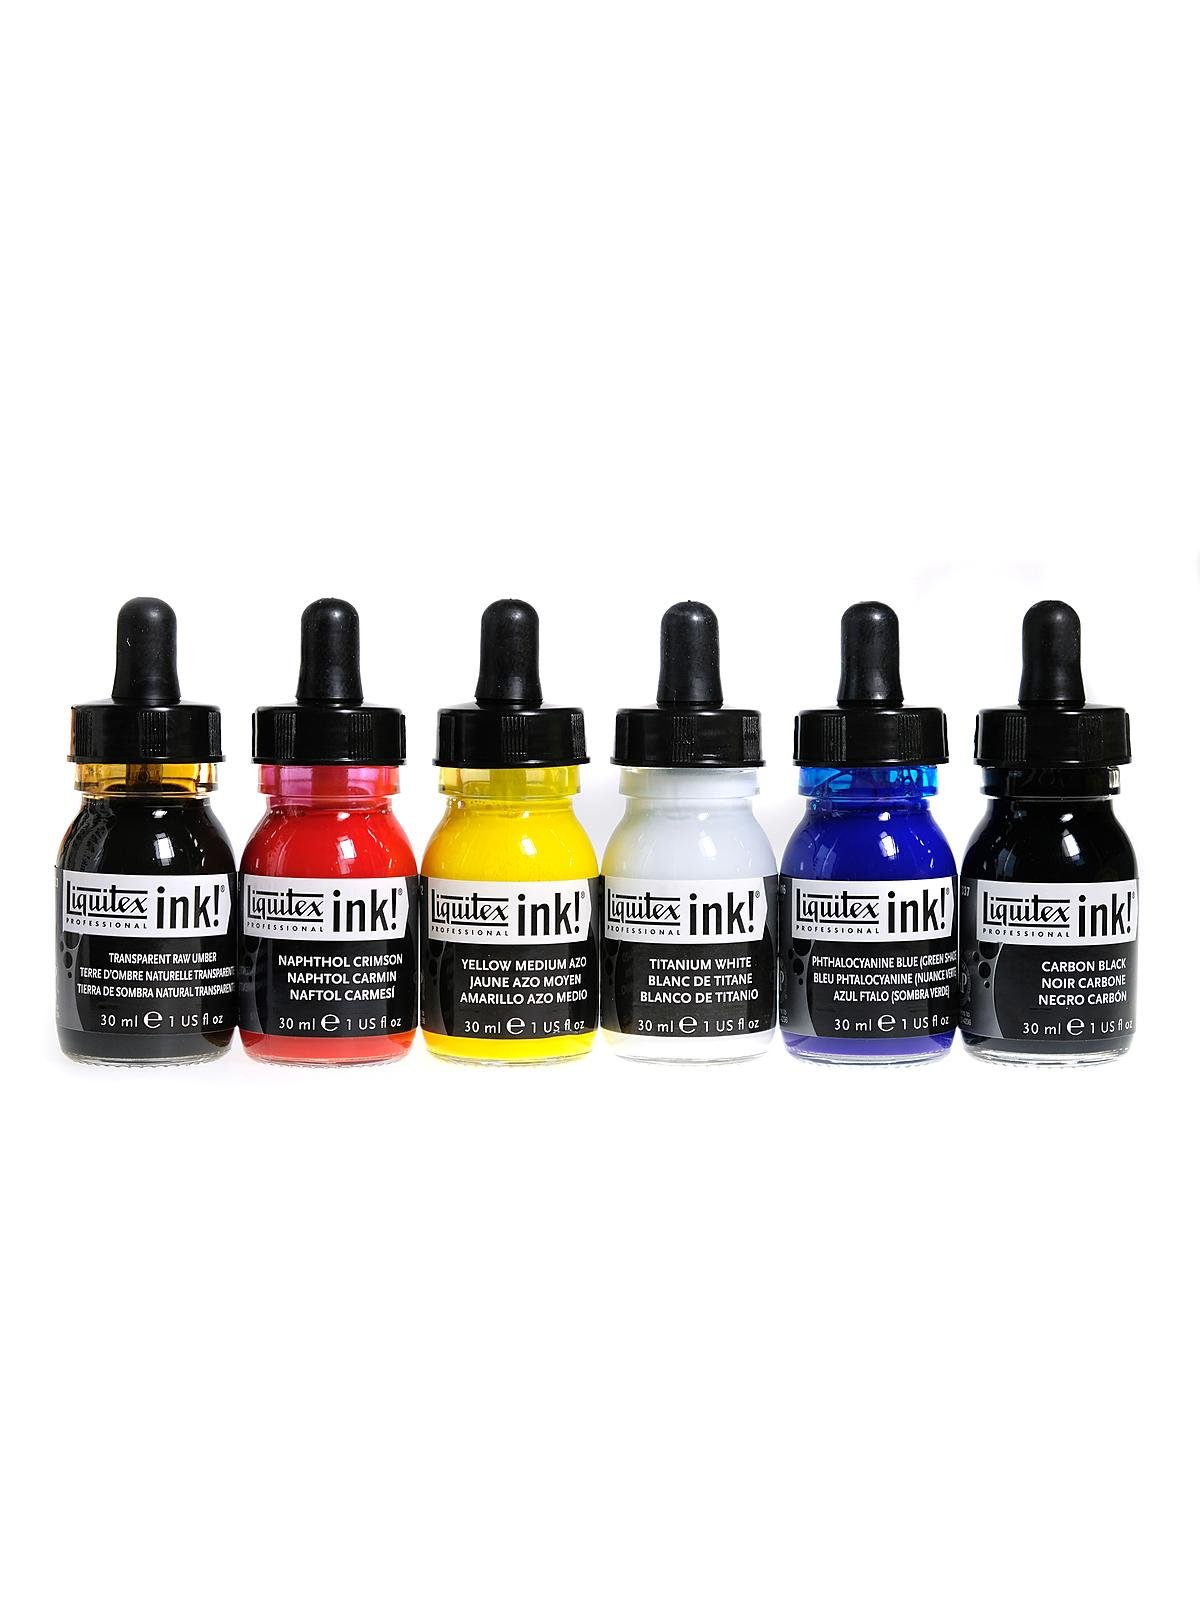 Liquitex - Professional Acrylic Ink! Sets